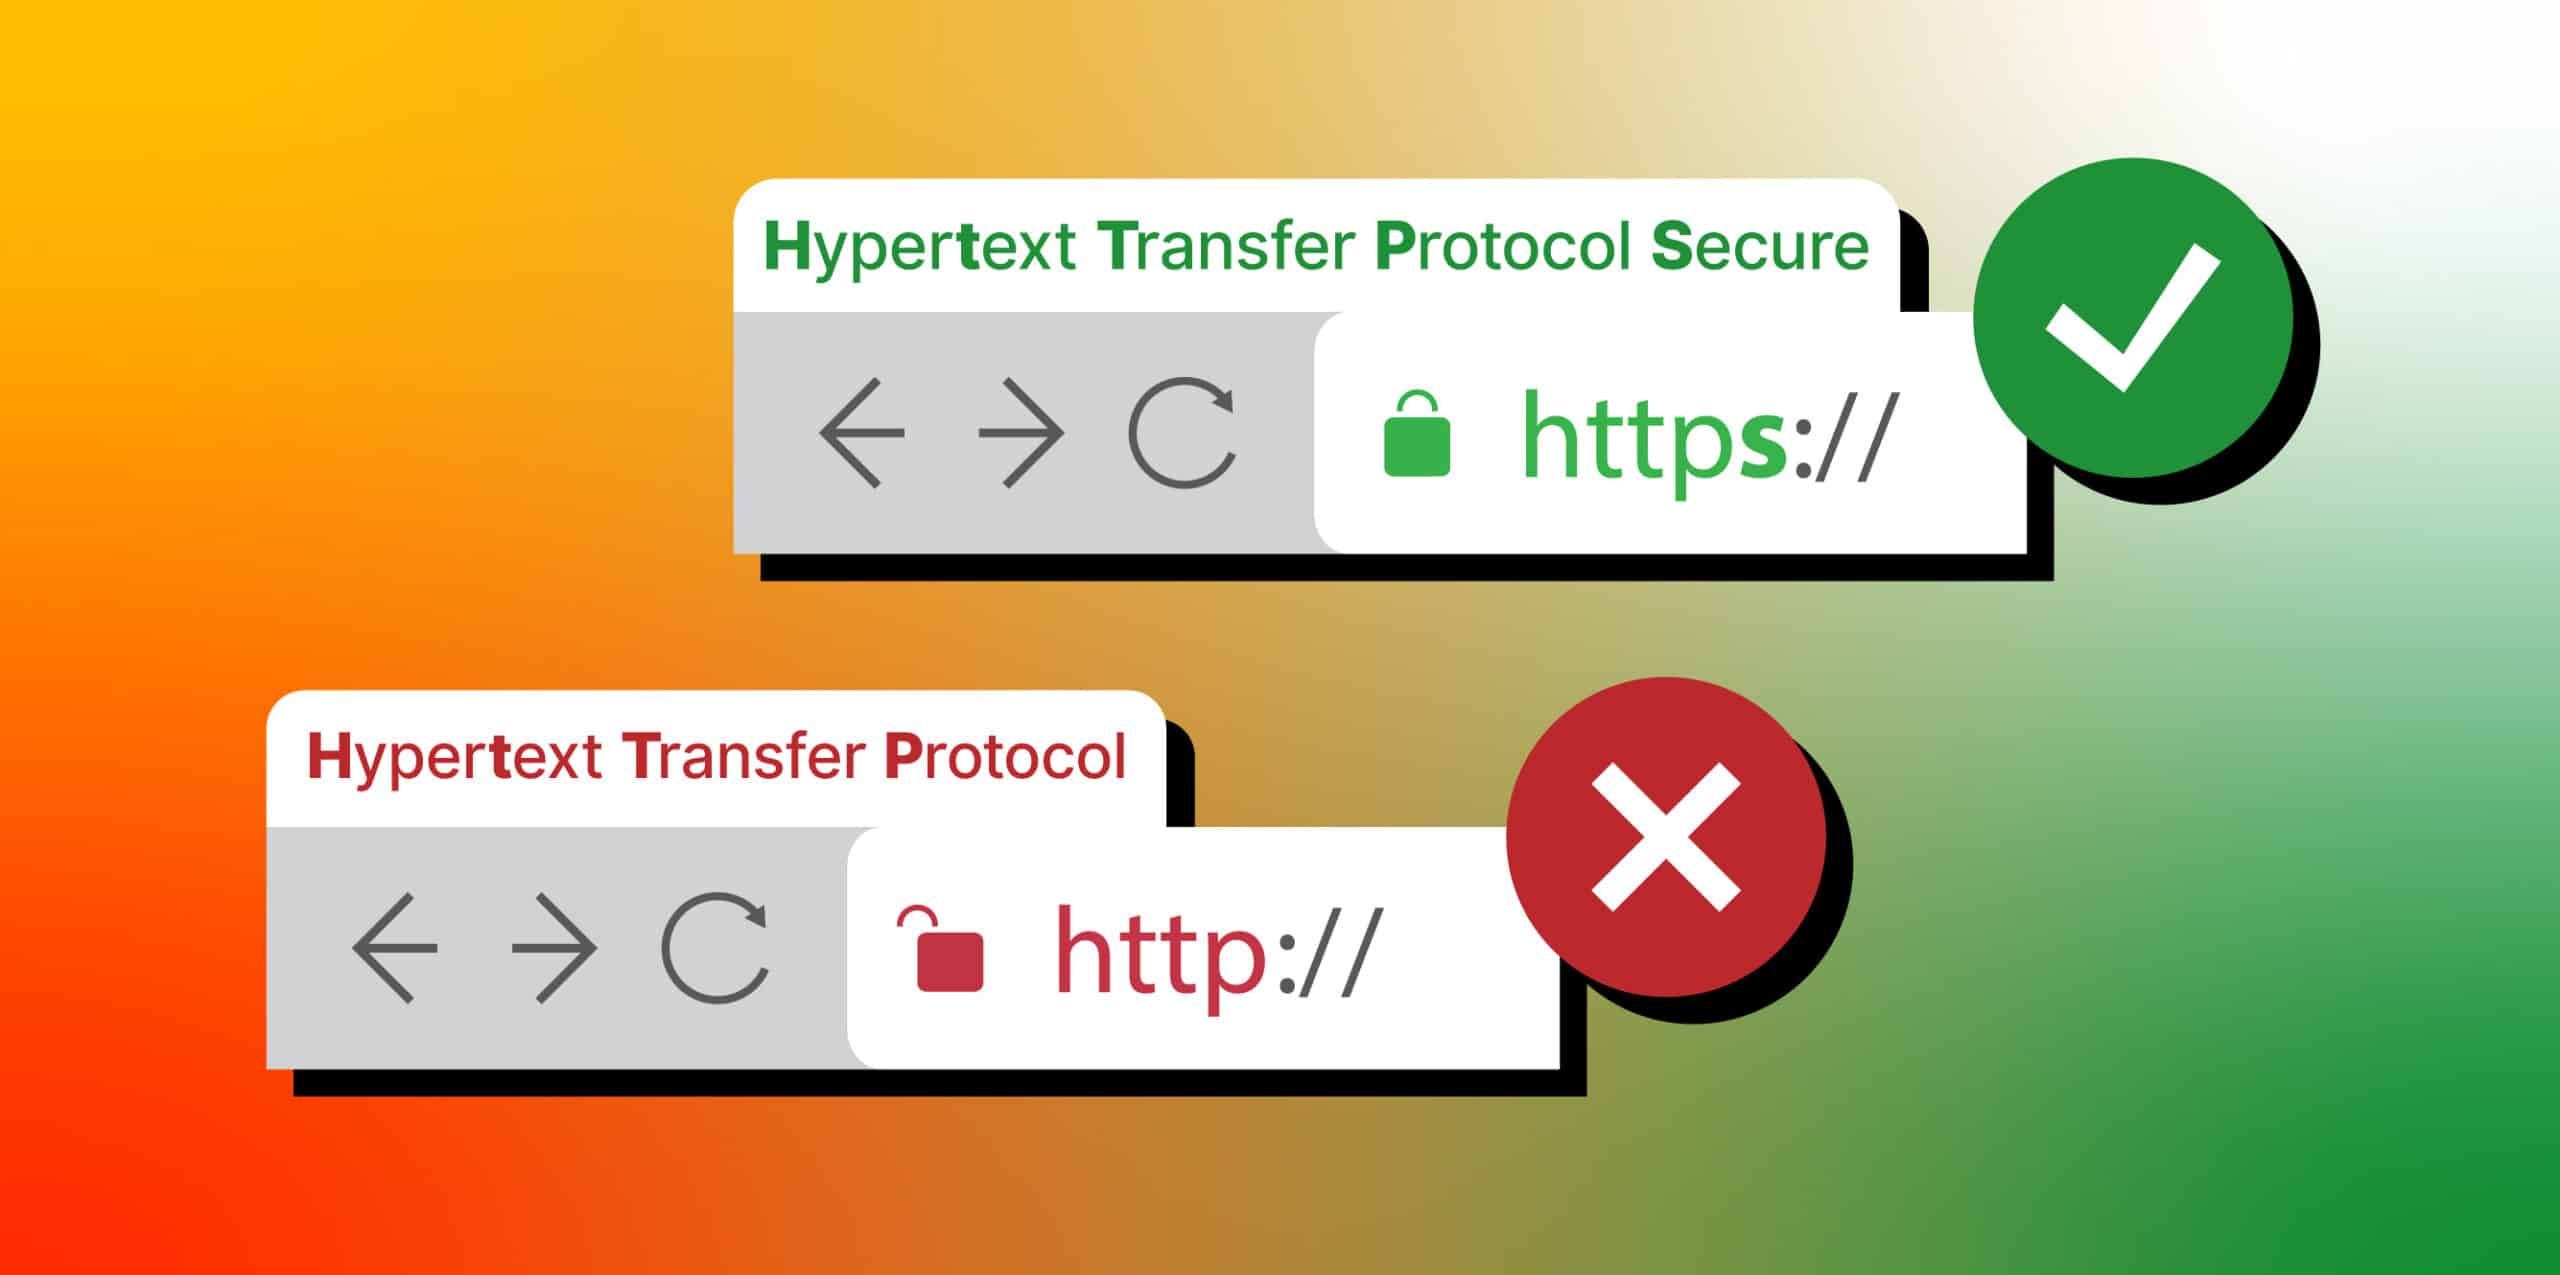 Protocole de transfert hypertexte sécurisé (HTTPS)